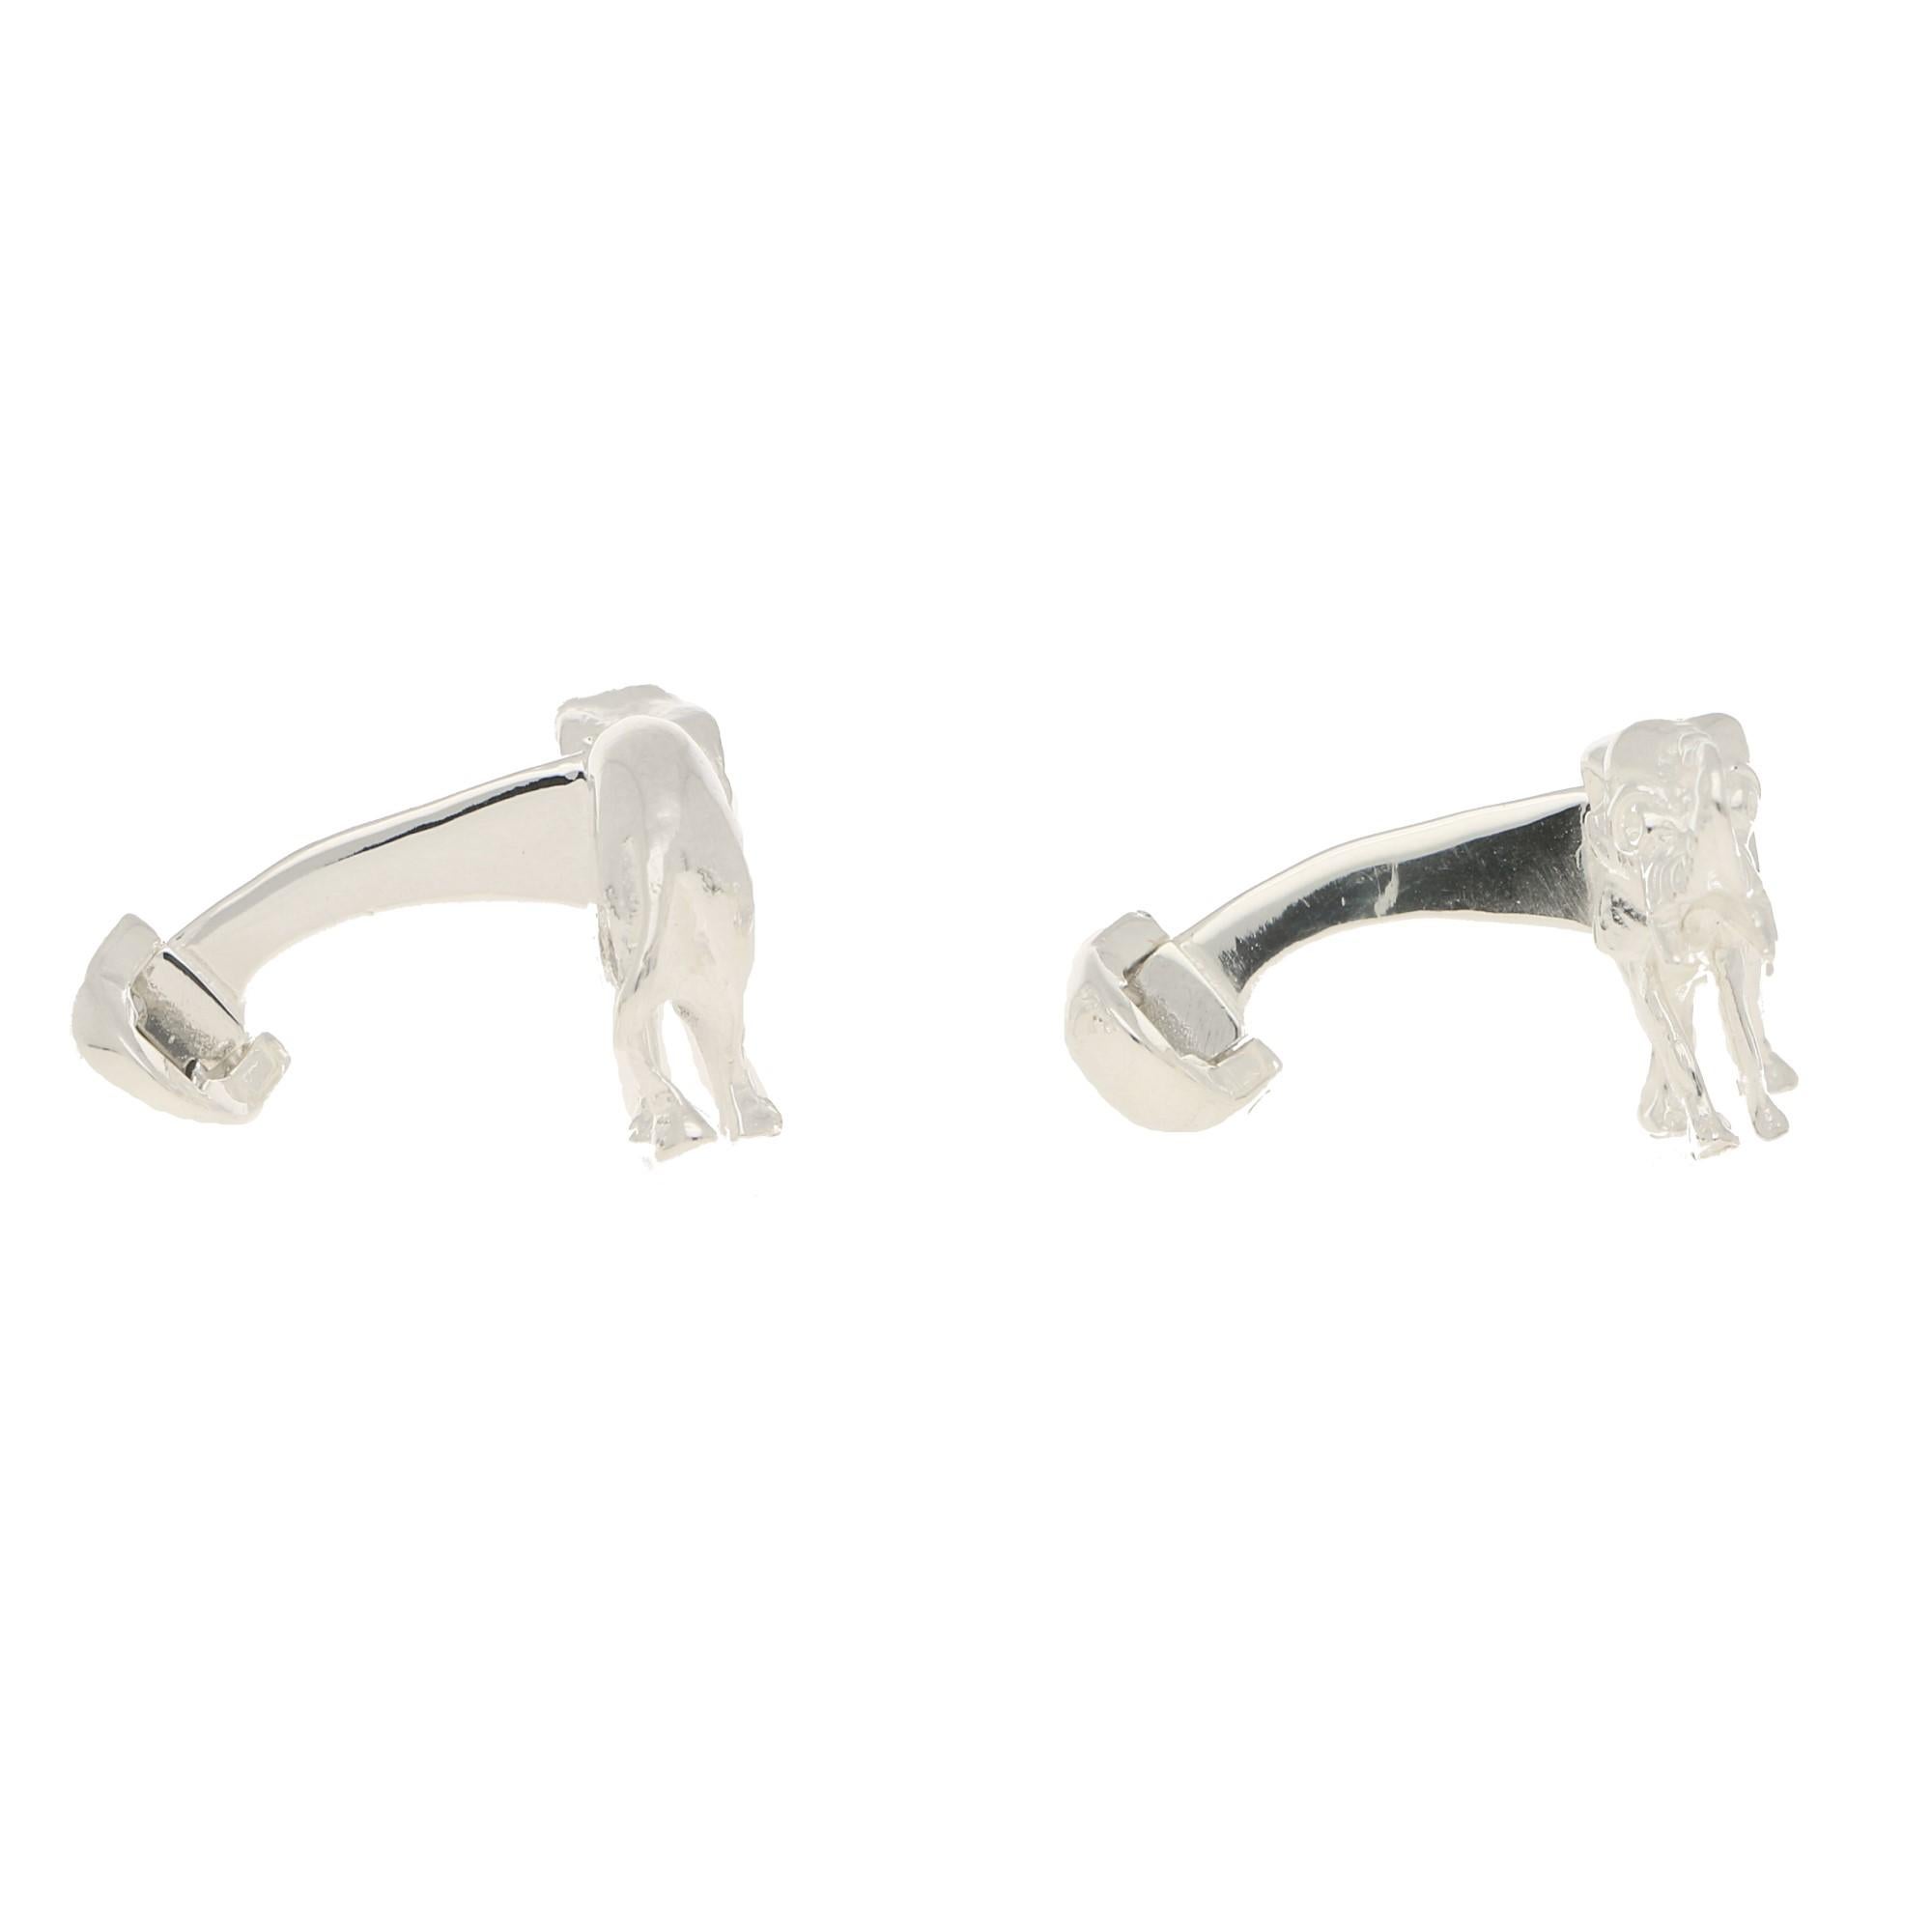 Modern Elephant Swivel Cufflinks in Solid British Sterling Silver